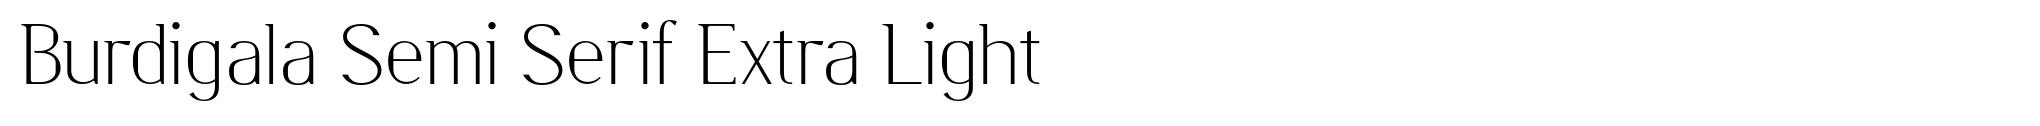 Burdigala Semi Serif Extra Light image